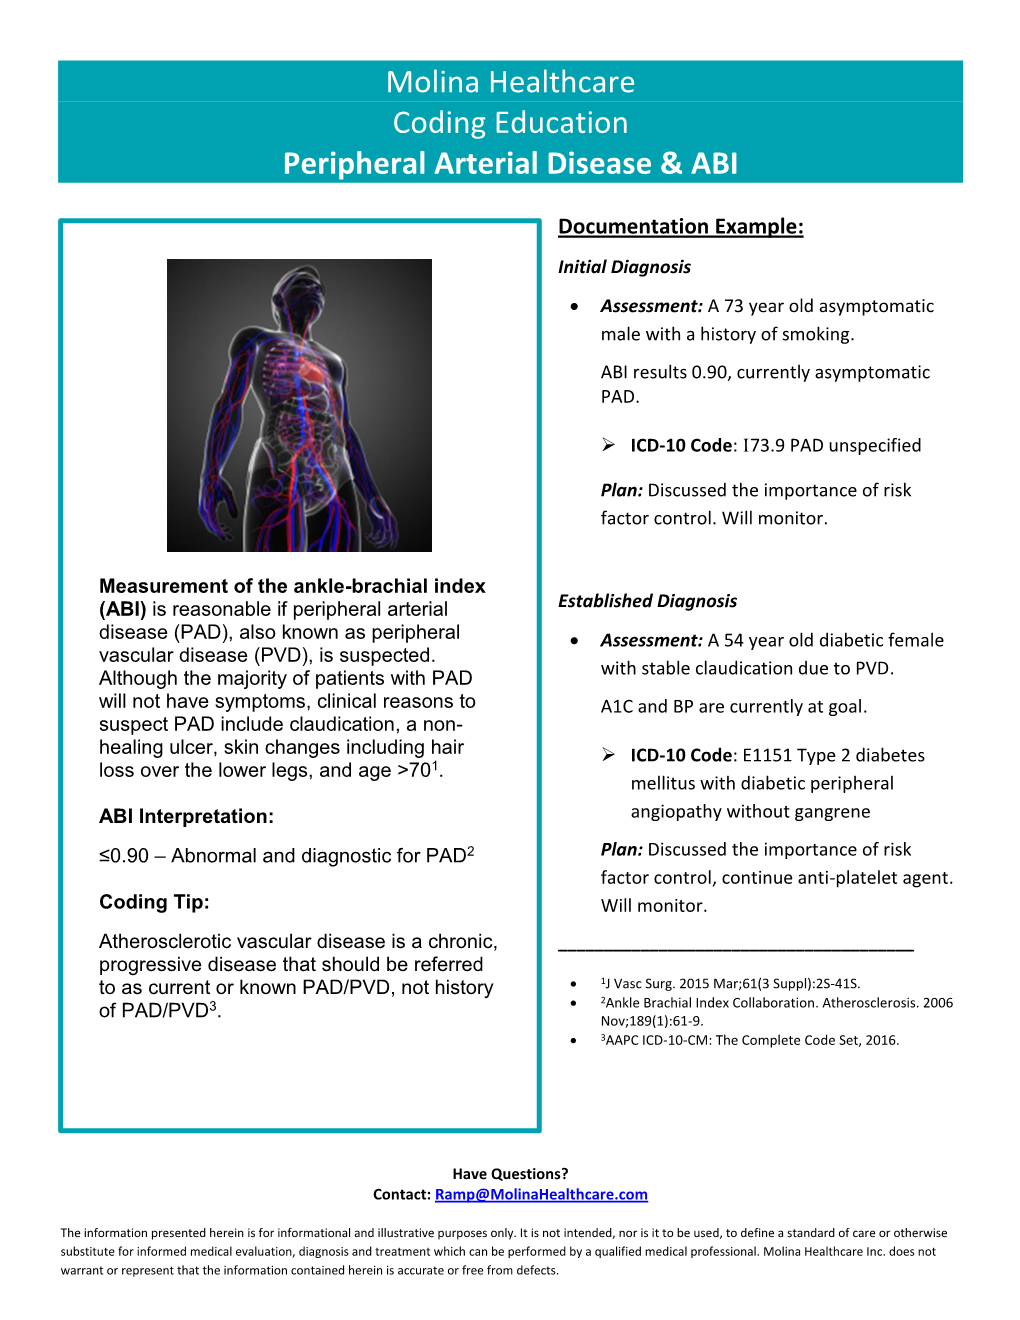 Molina Healthcare Coding Education Peripheral Arterial Disease &